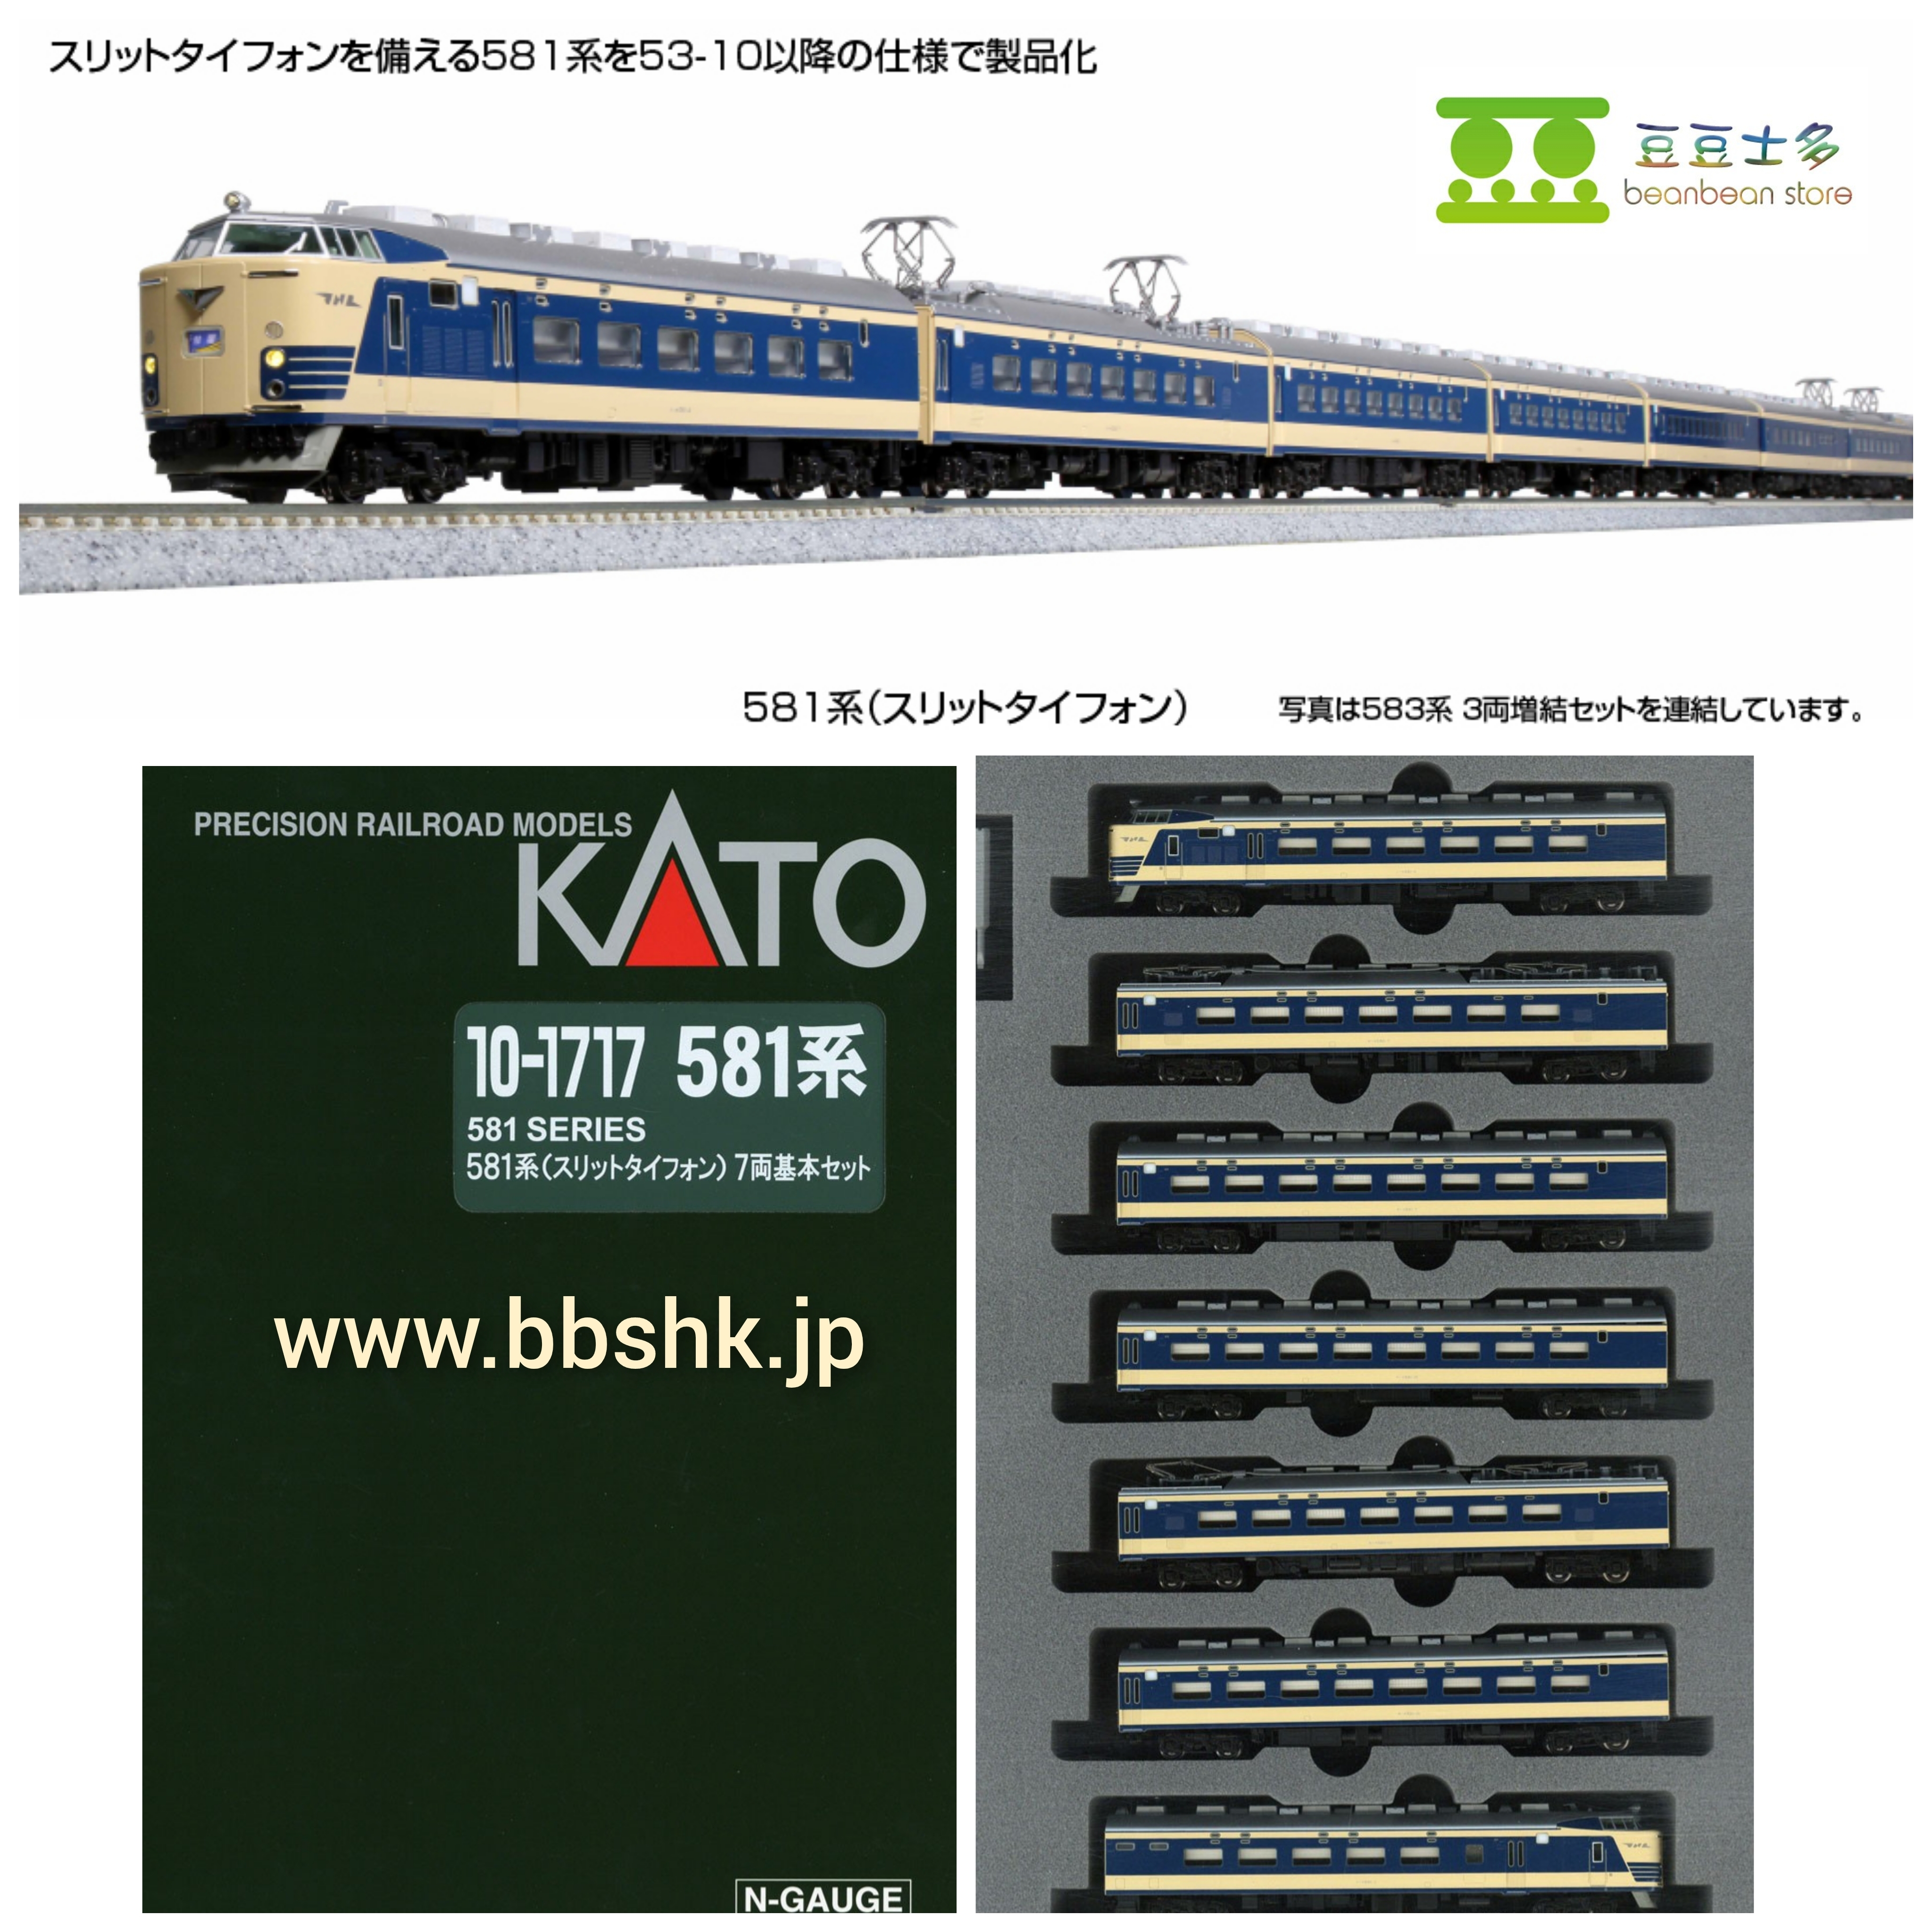 KATO 10-1717 581系 (スリットタイフォン) 基本・7両